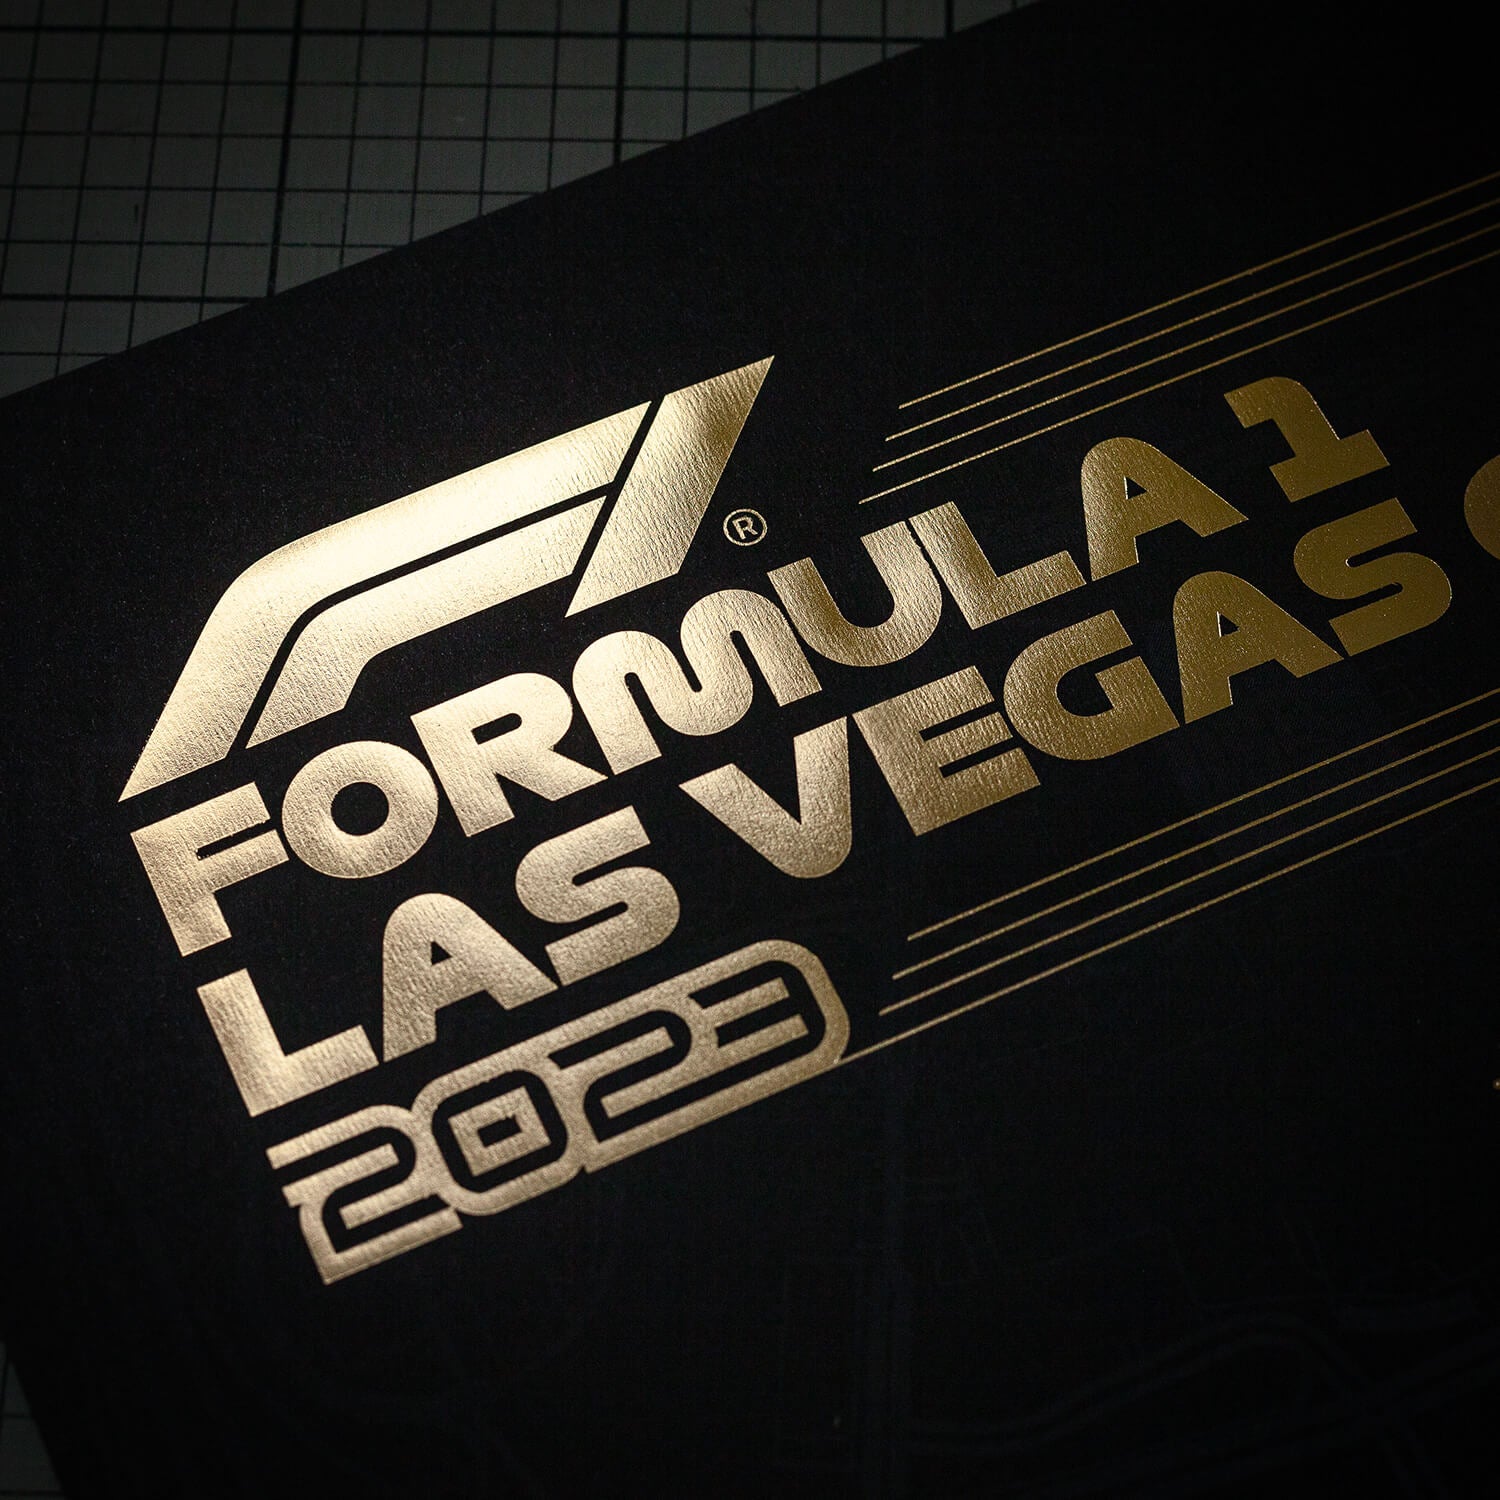 Las Vegas Strip Circuit - Formula 1 - 2023 | Collector's Edition | Unique Numbers